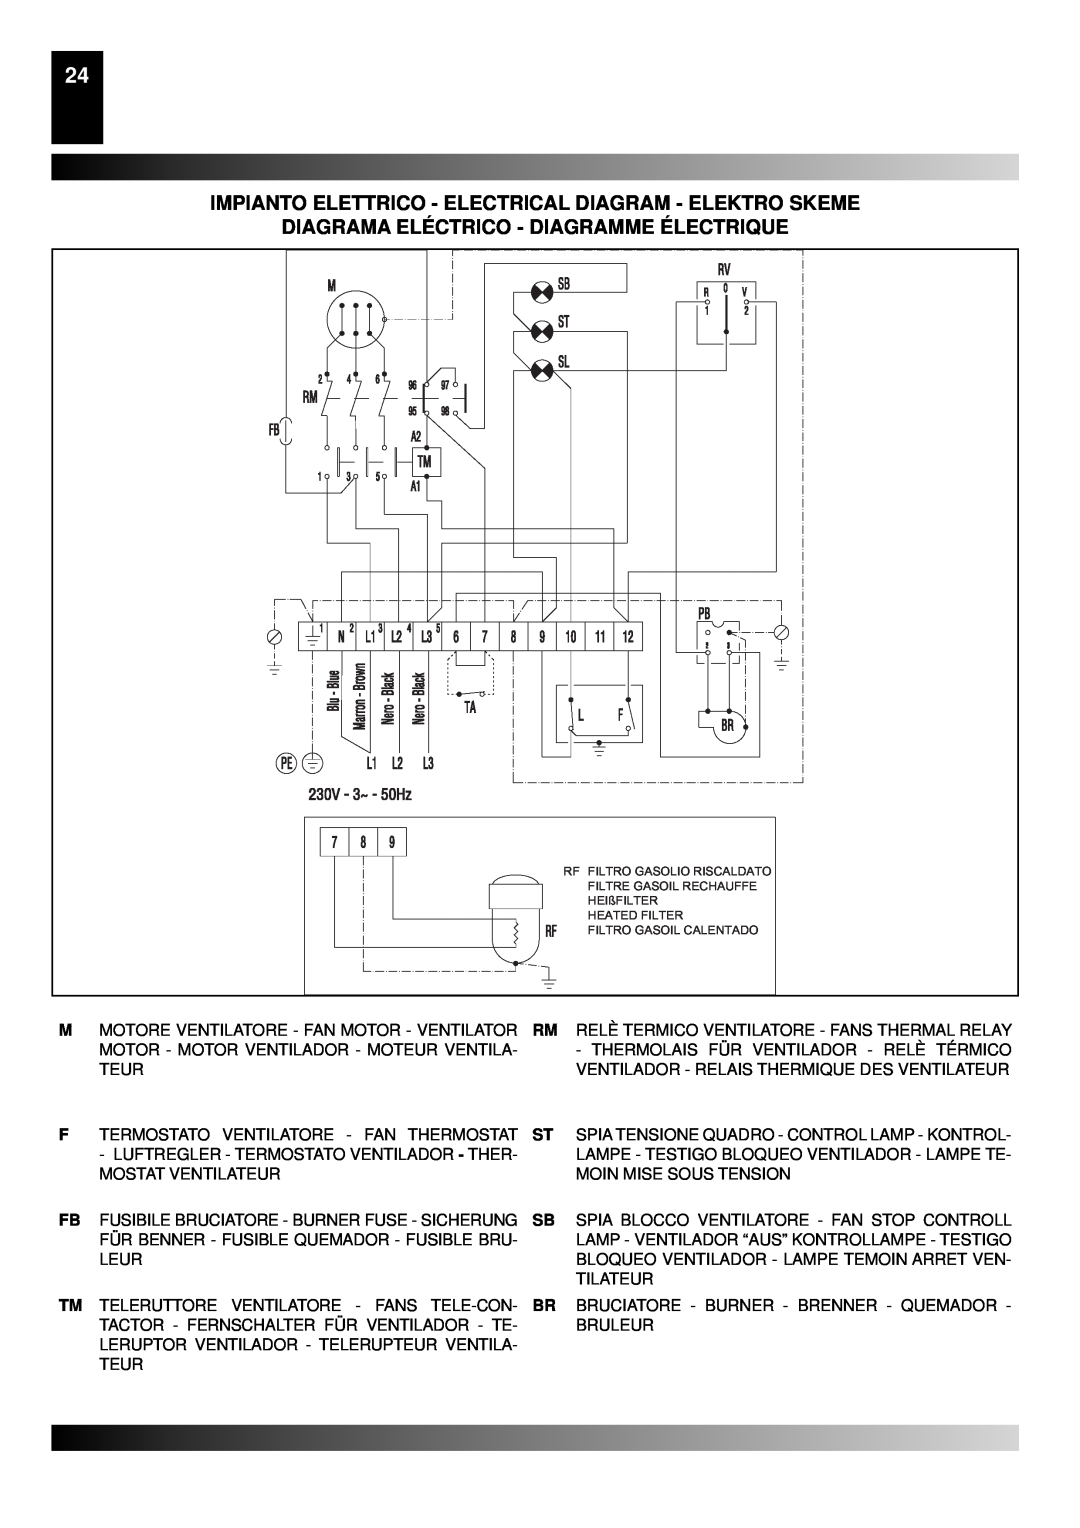 Master Lock BG 100 Impianto Elettrico - Electrical Diagram - Elektro Skeme, Diagrama Eléctrico - Diagramme Électrique 